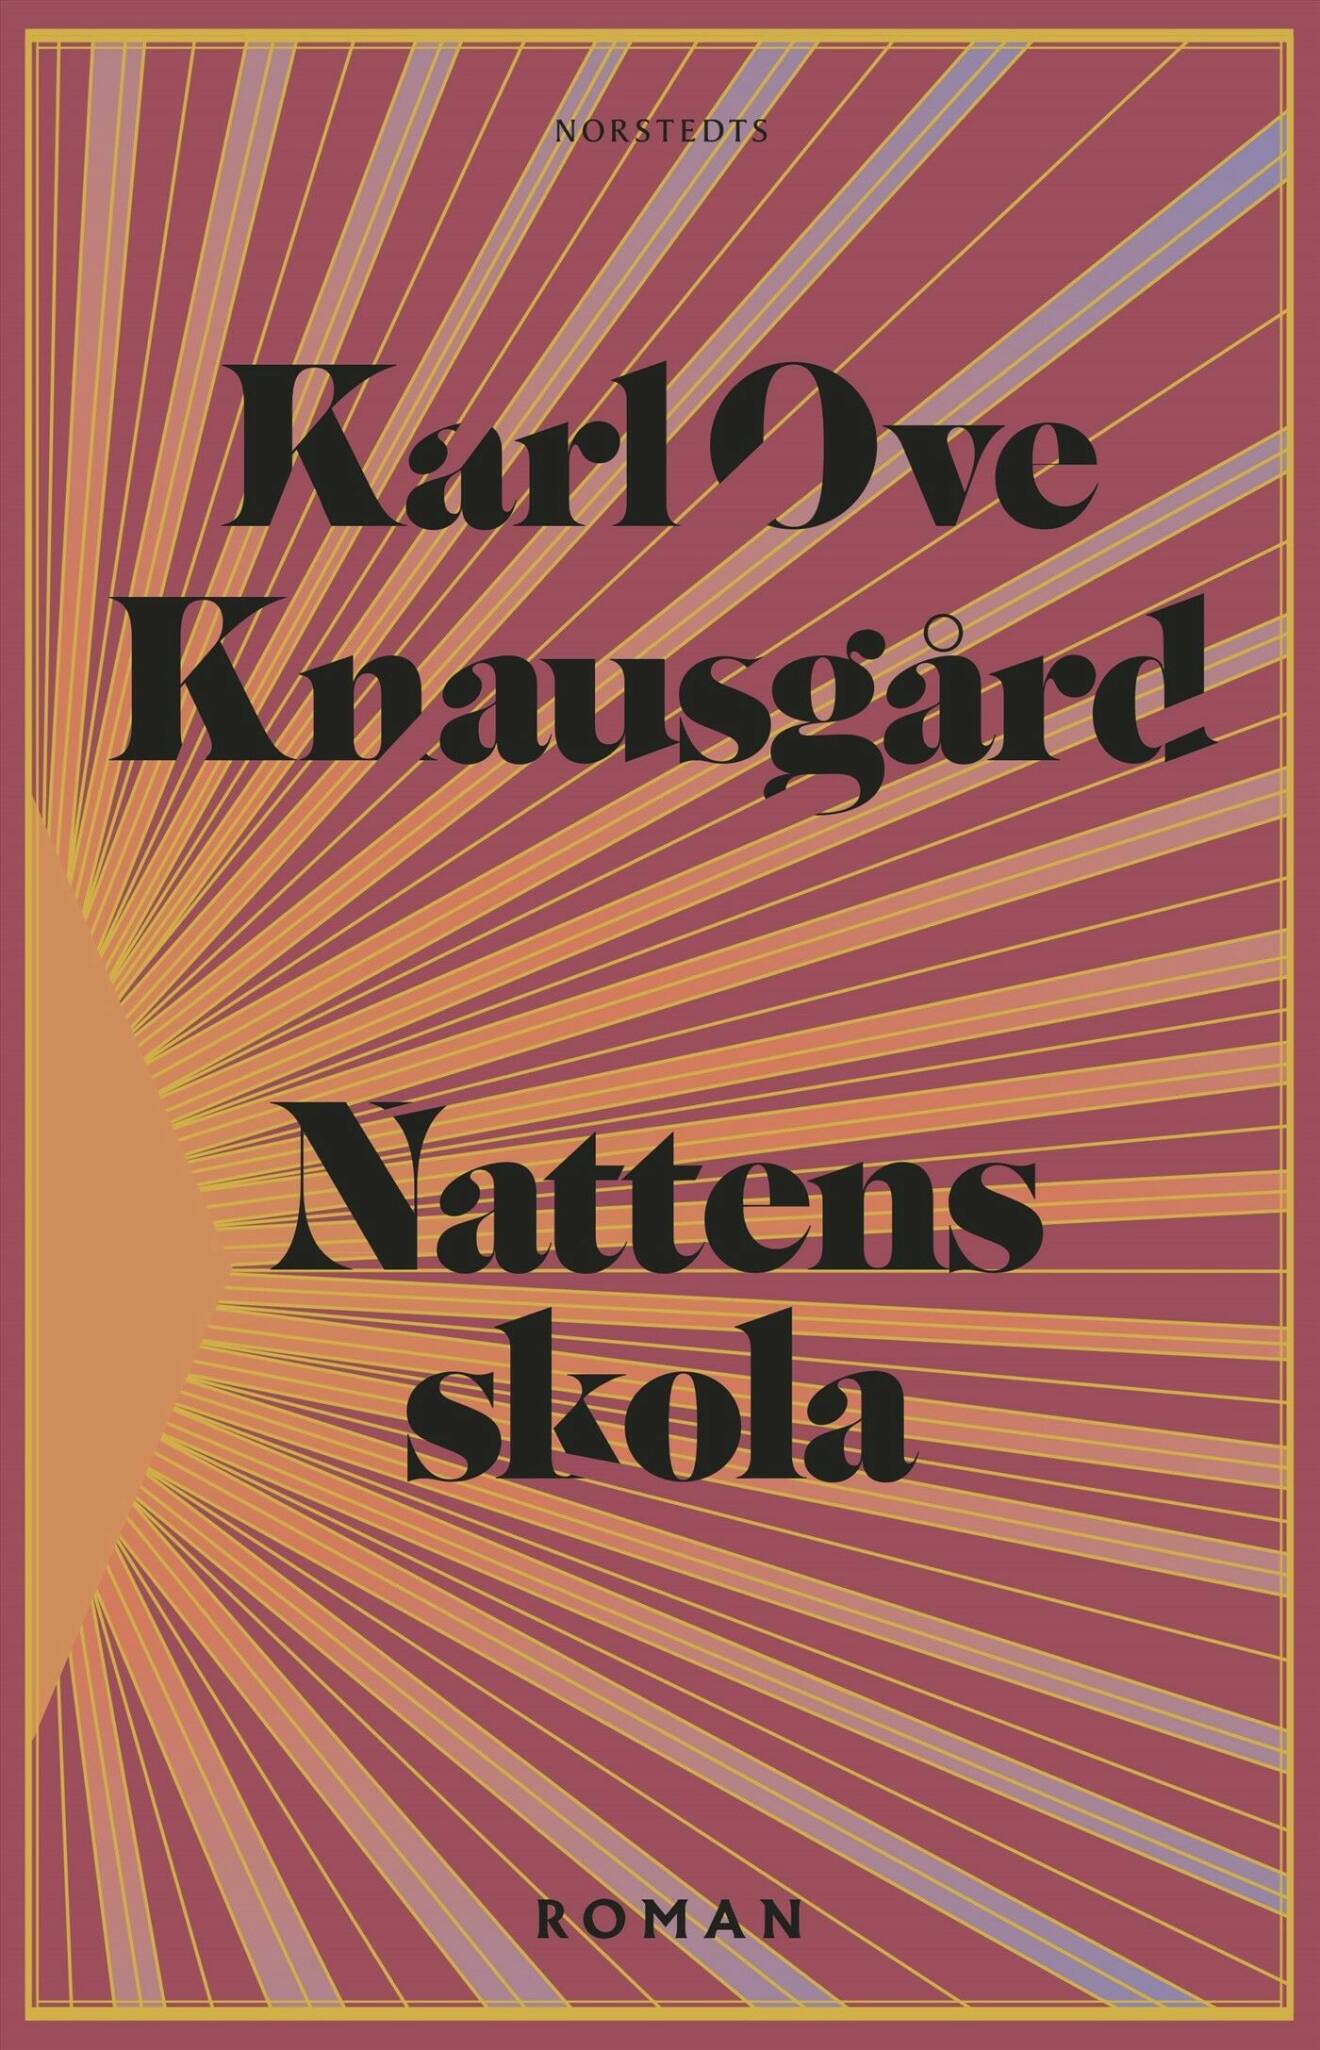 Nattens skola av Karl Ove Knausgård (Norstedts).